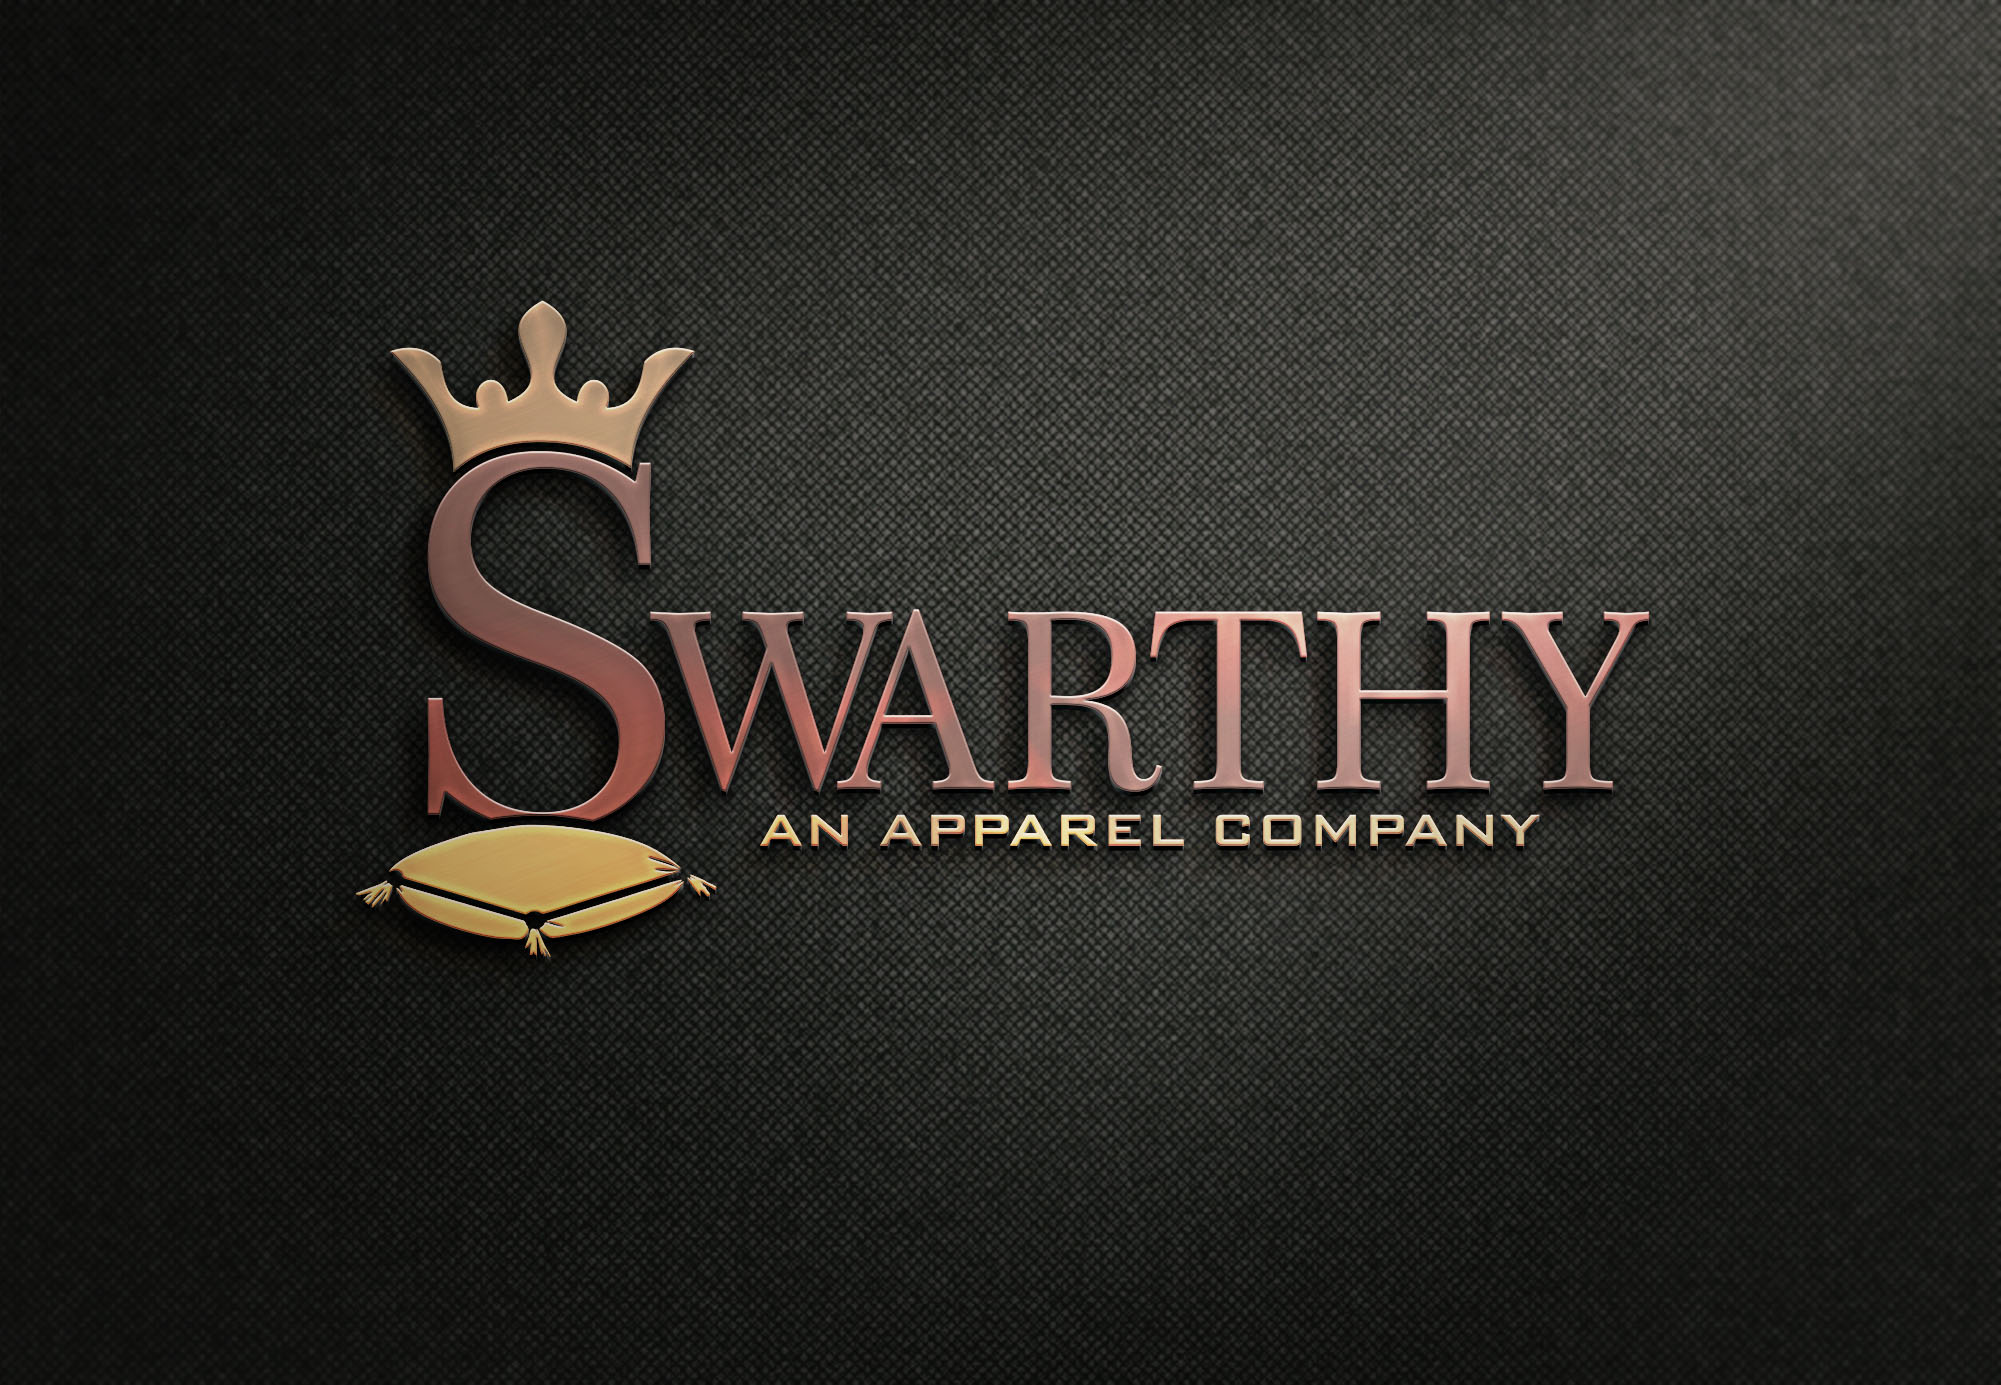 Swarthy Apparel Company